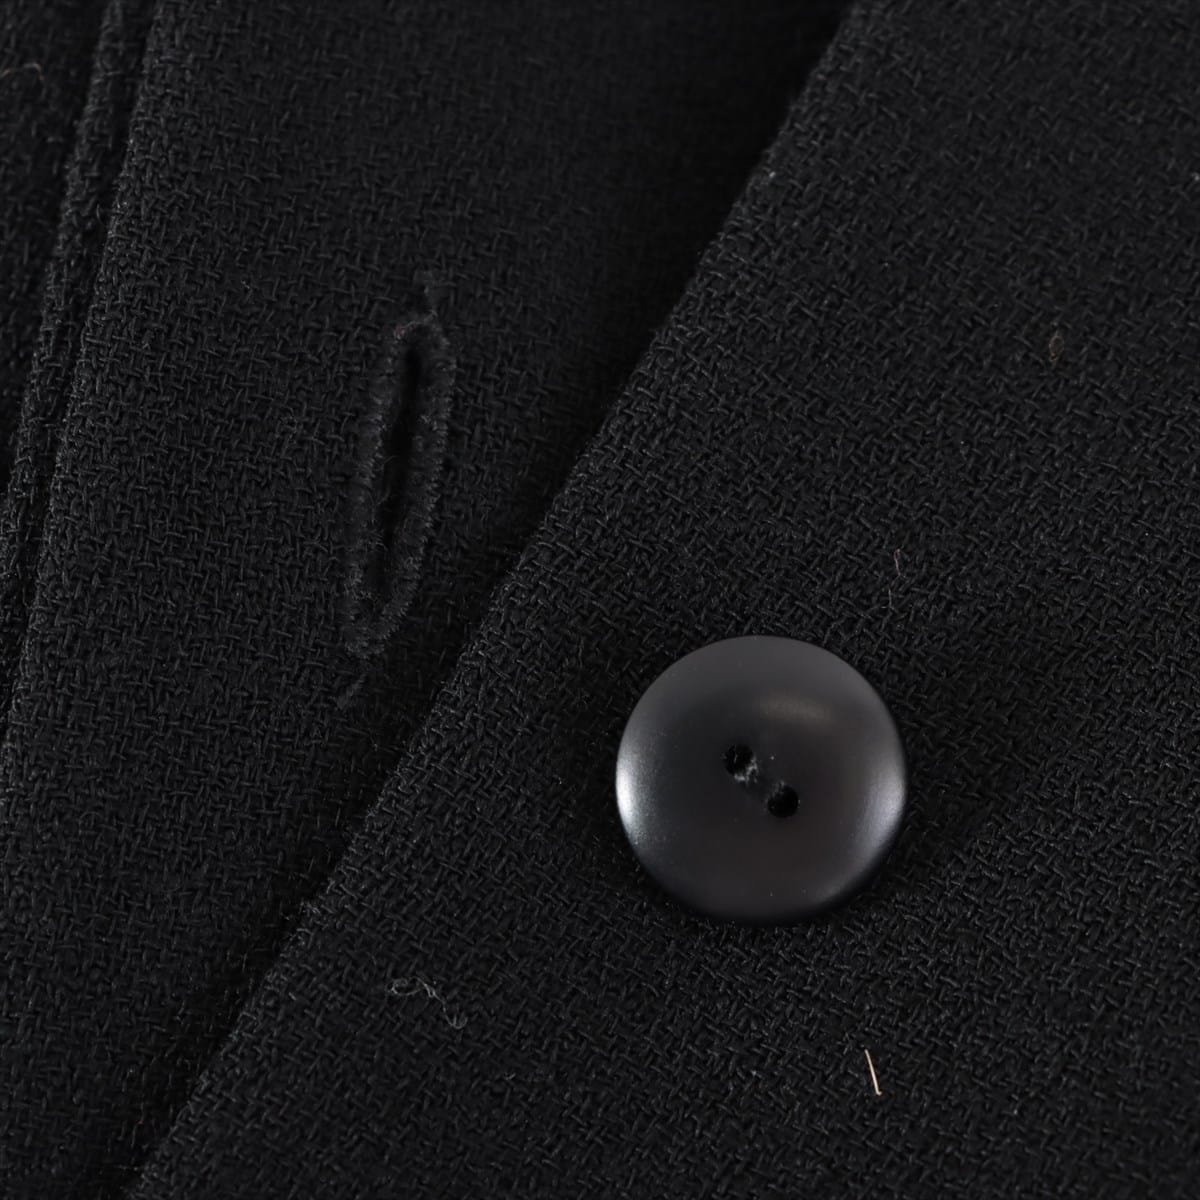 Chanel Coco Button Wool Setup 40 Ladies' Black